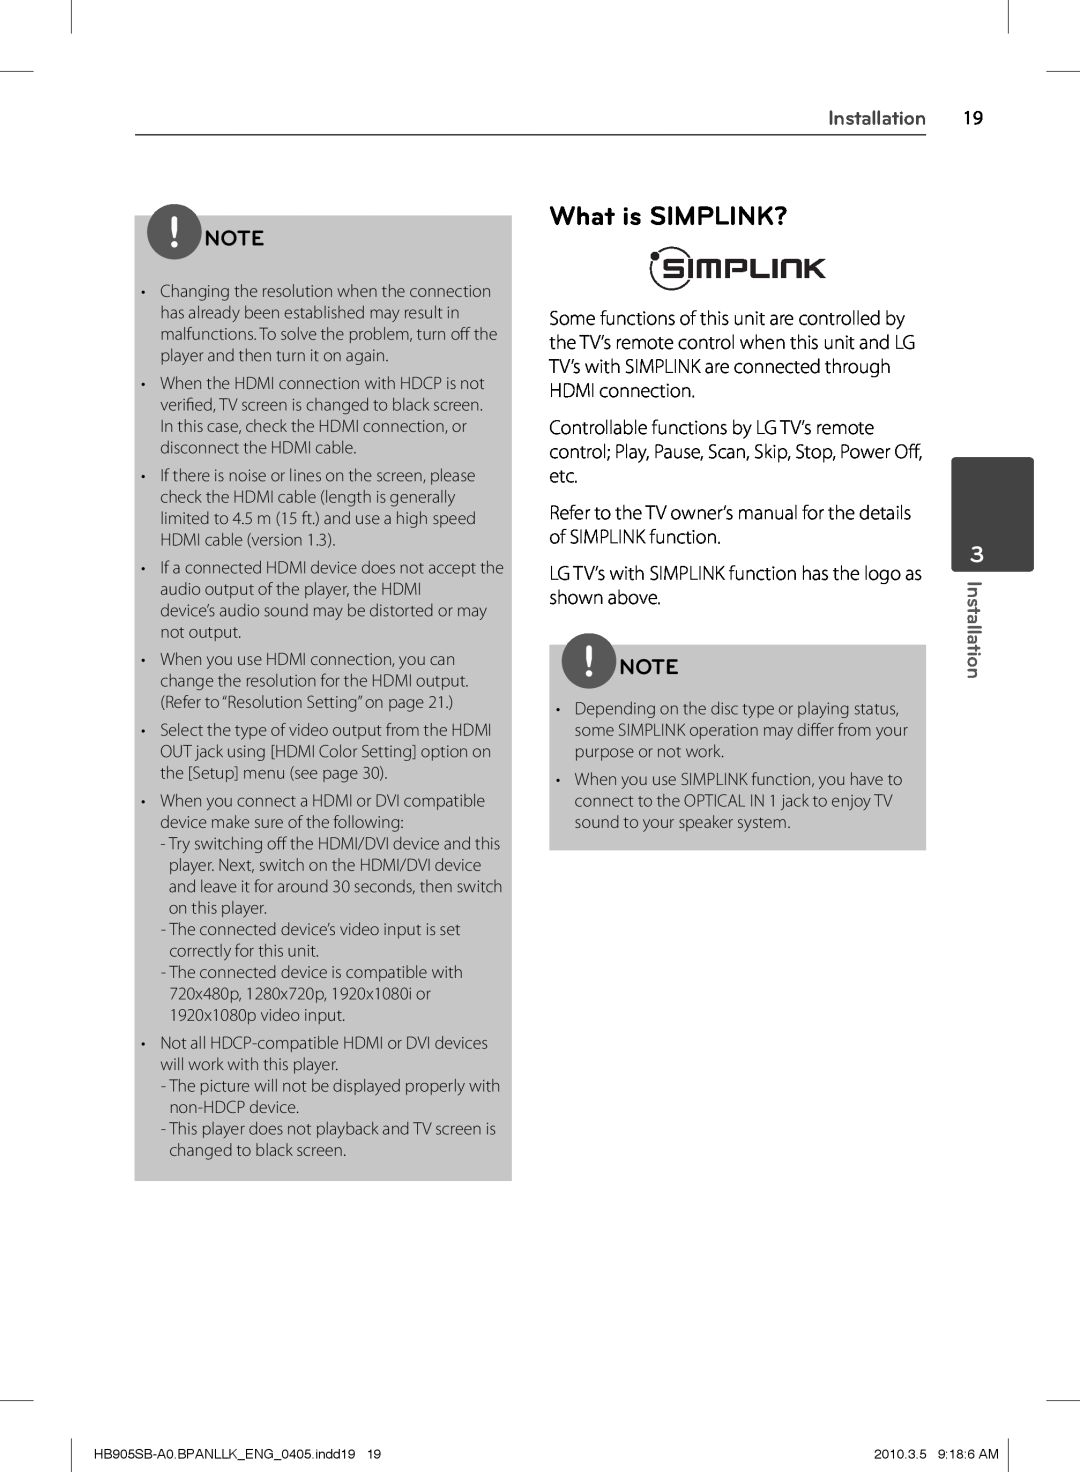 LG Electronics owner manual What is SIMPLINK?, Installation, HB905SB-A0.BPANLLK ENG 0405.indd1919, 2010.3.5 9 18 6 AM 